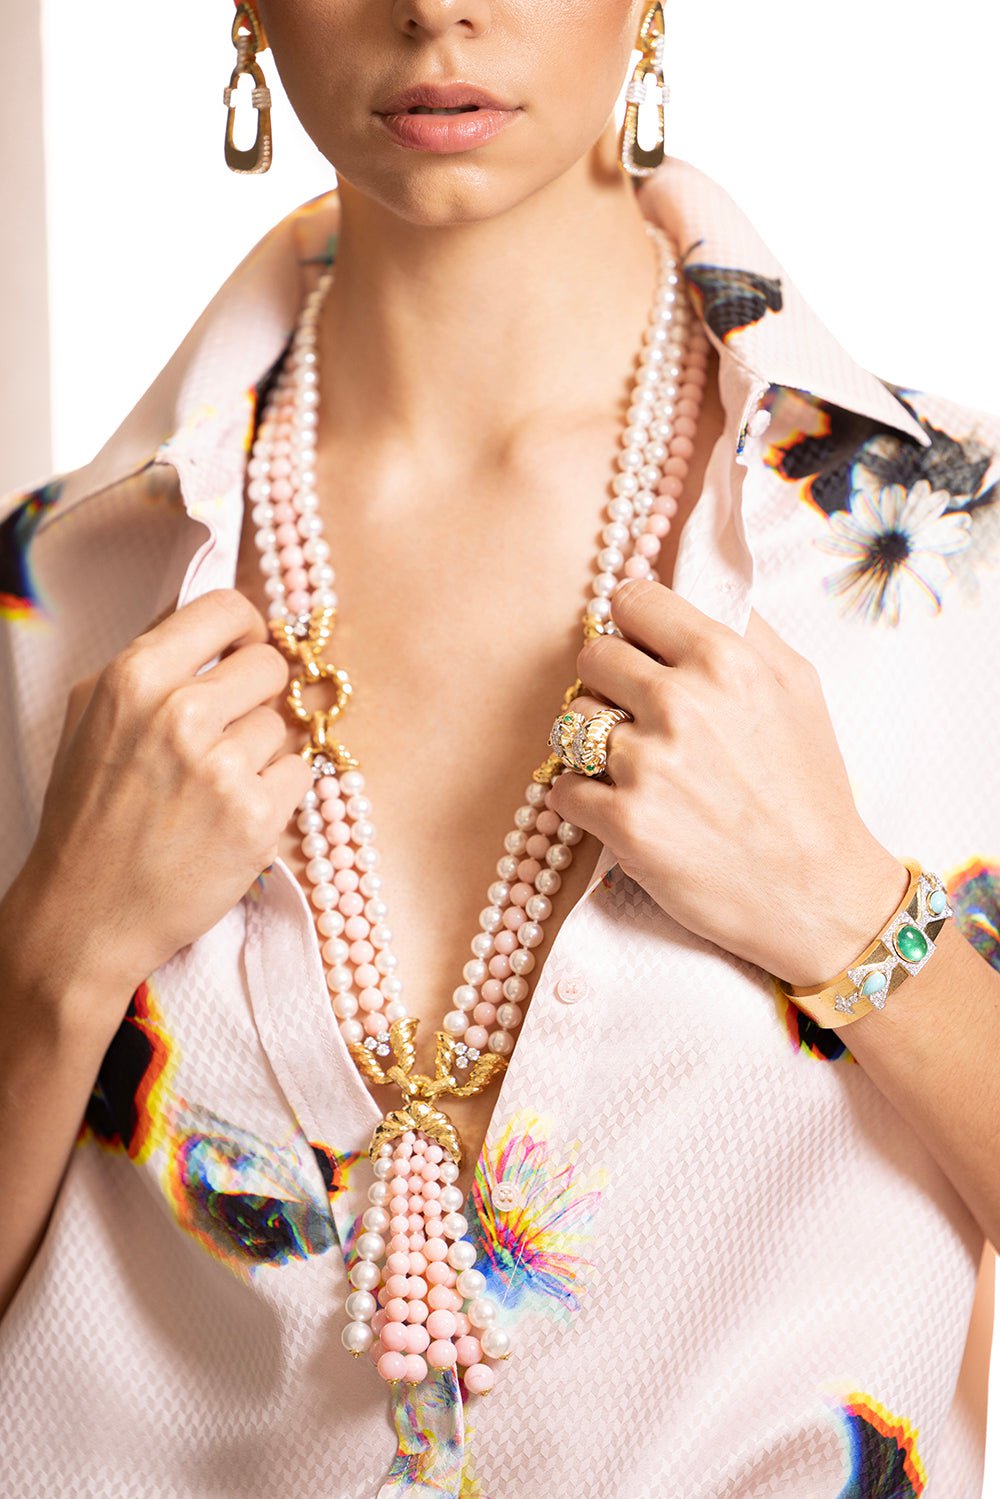 DAVID WEBB-Pink Opal Diamond Necklace-YELLOW GOLD